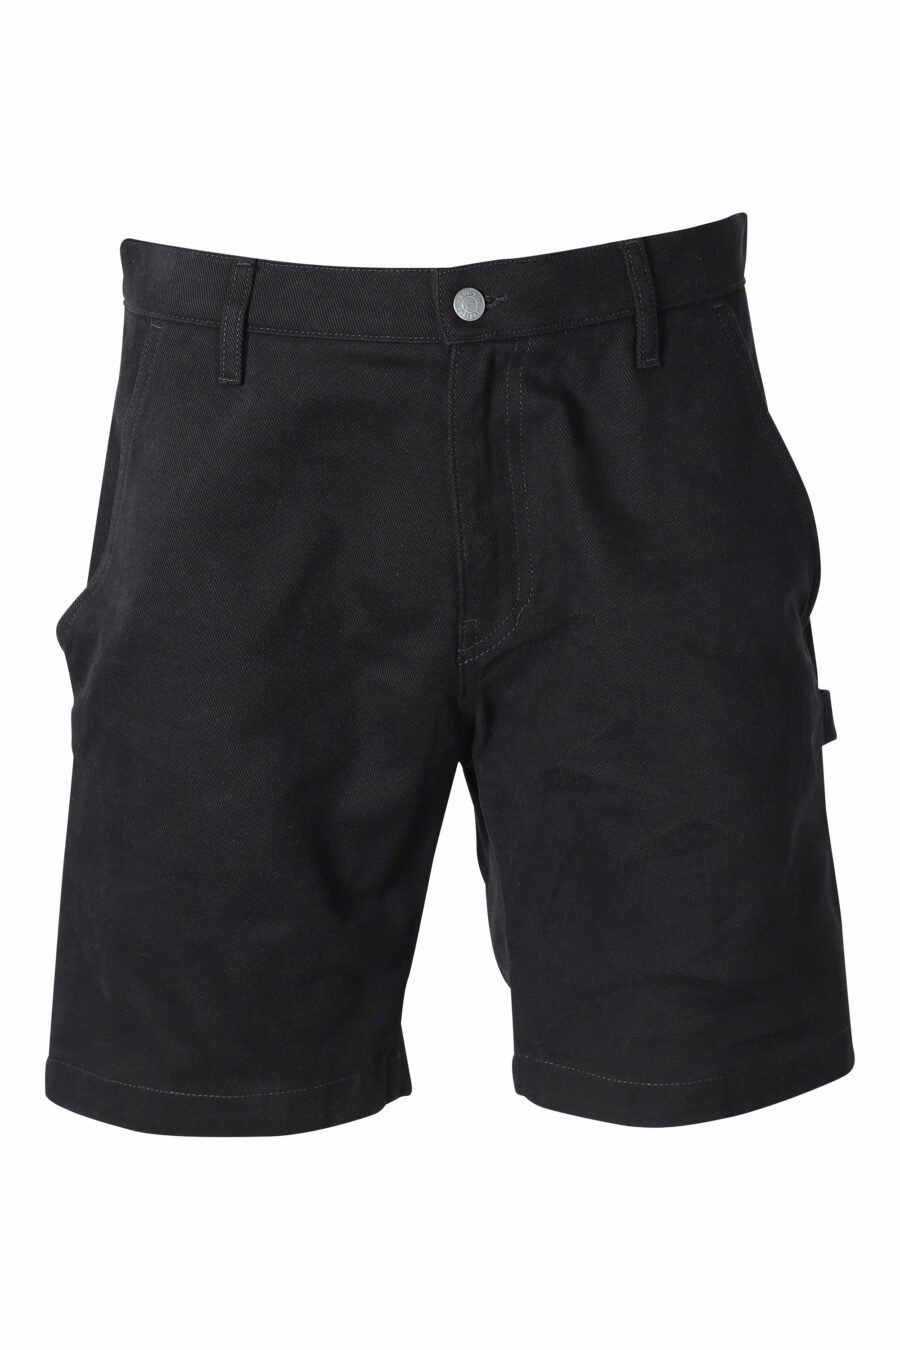 Short en denim noir avec poches latérales - IMG 9563